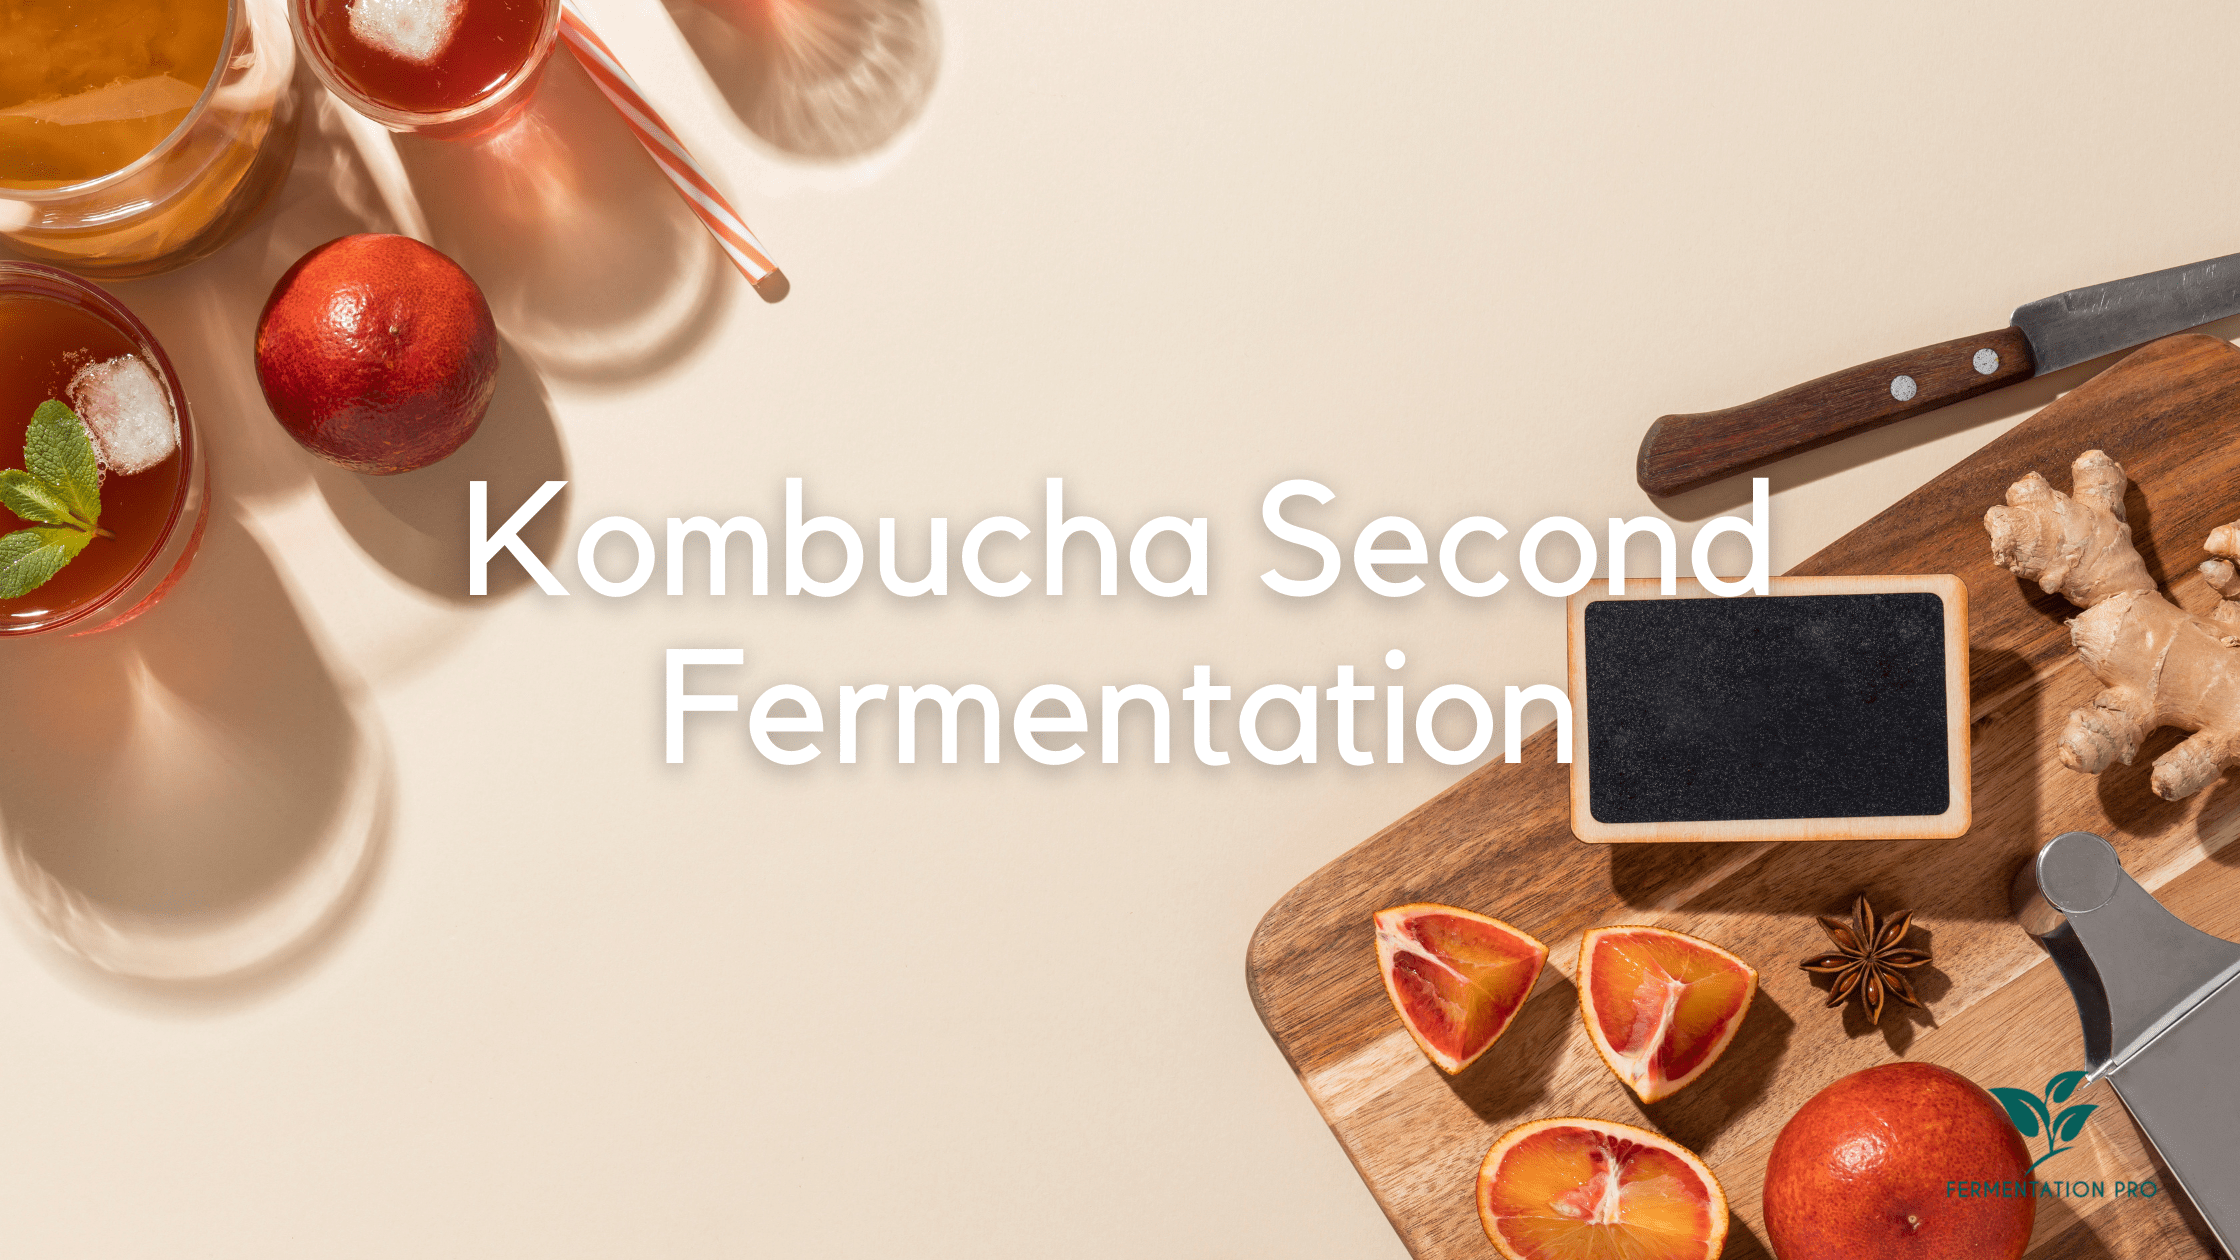 Seal Pack Student - Kombucha Second Fermentation - Fermentation Pro